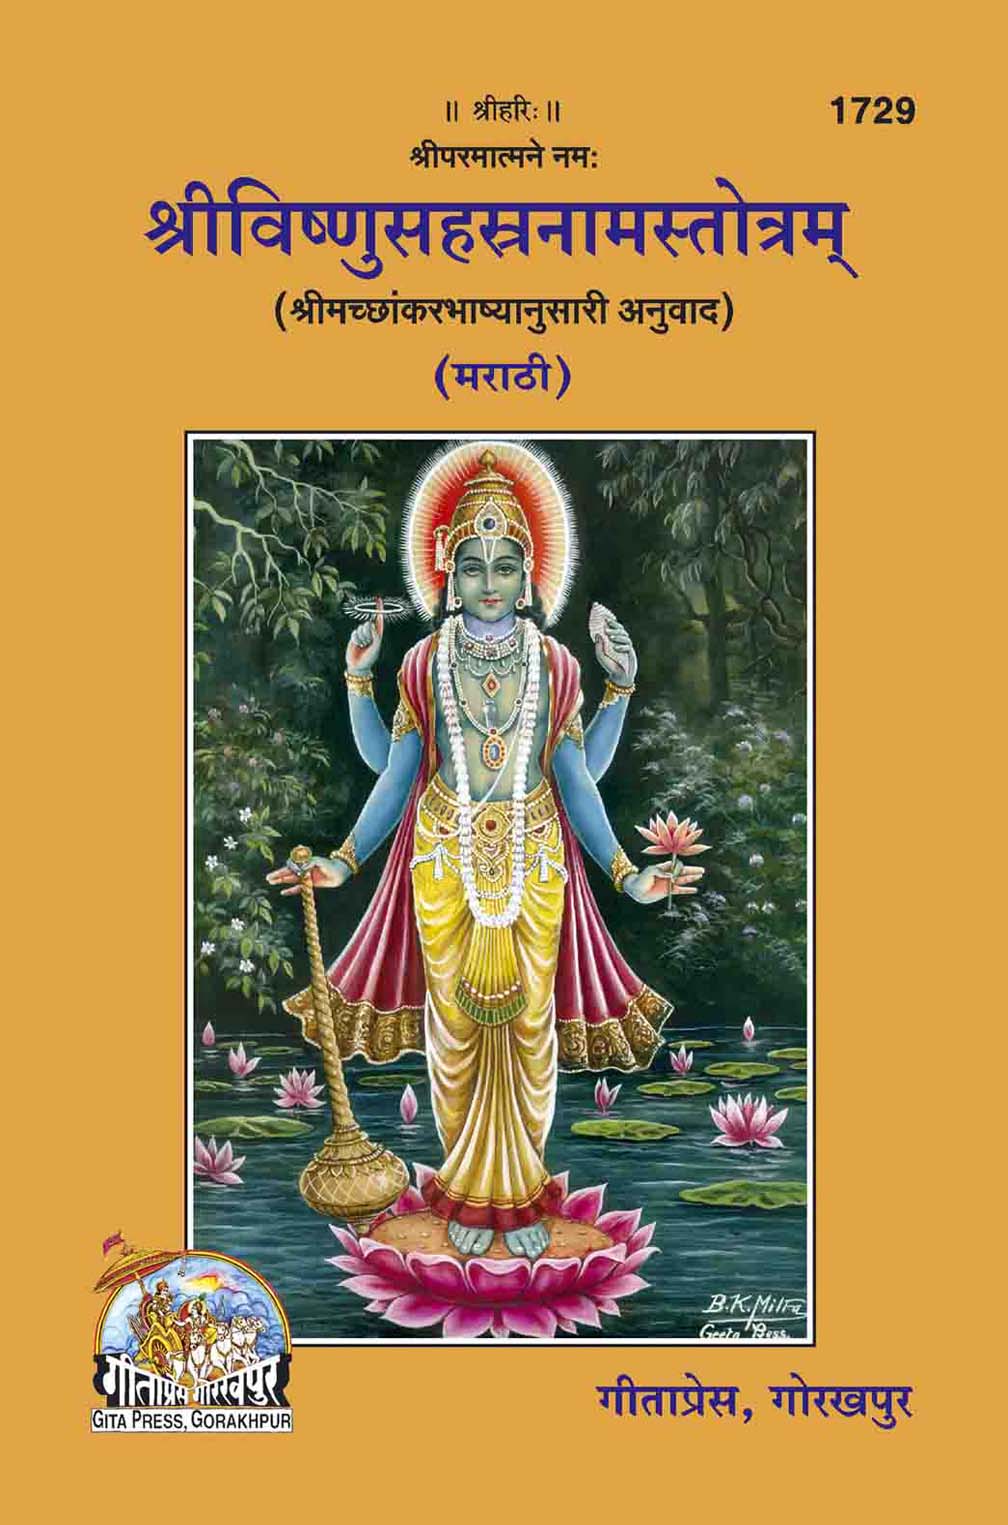 Shri Vishnu Sahastranam Stotram (Marathi) by Gita Press